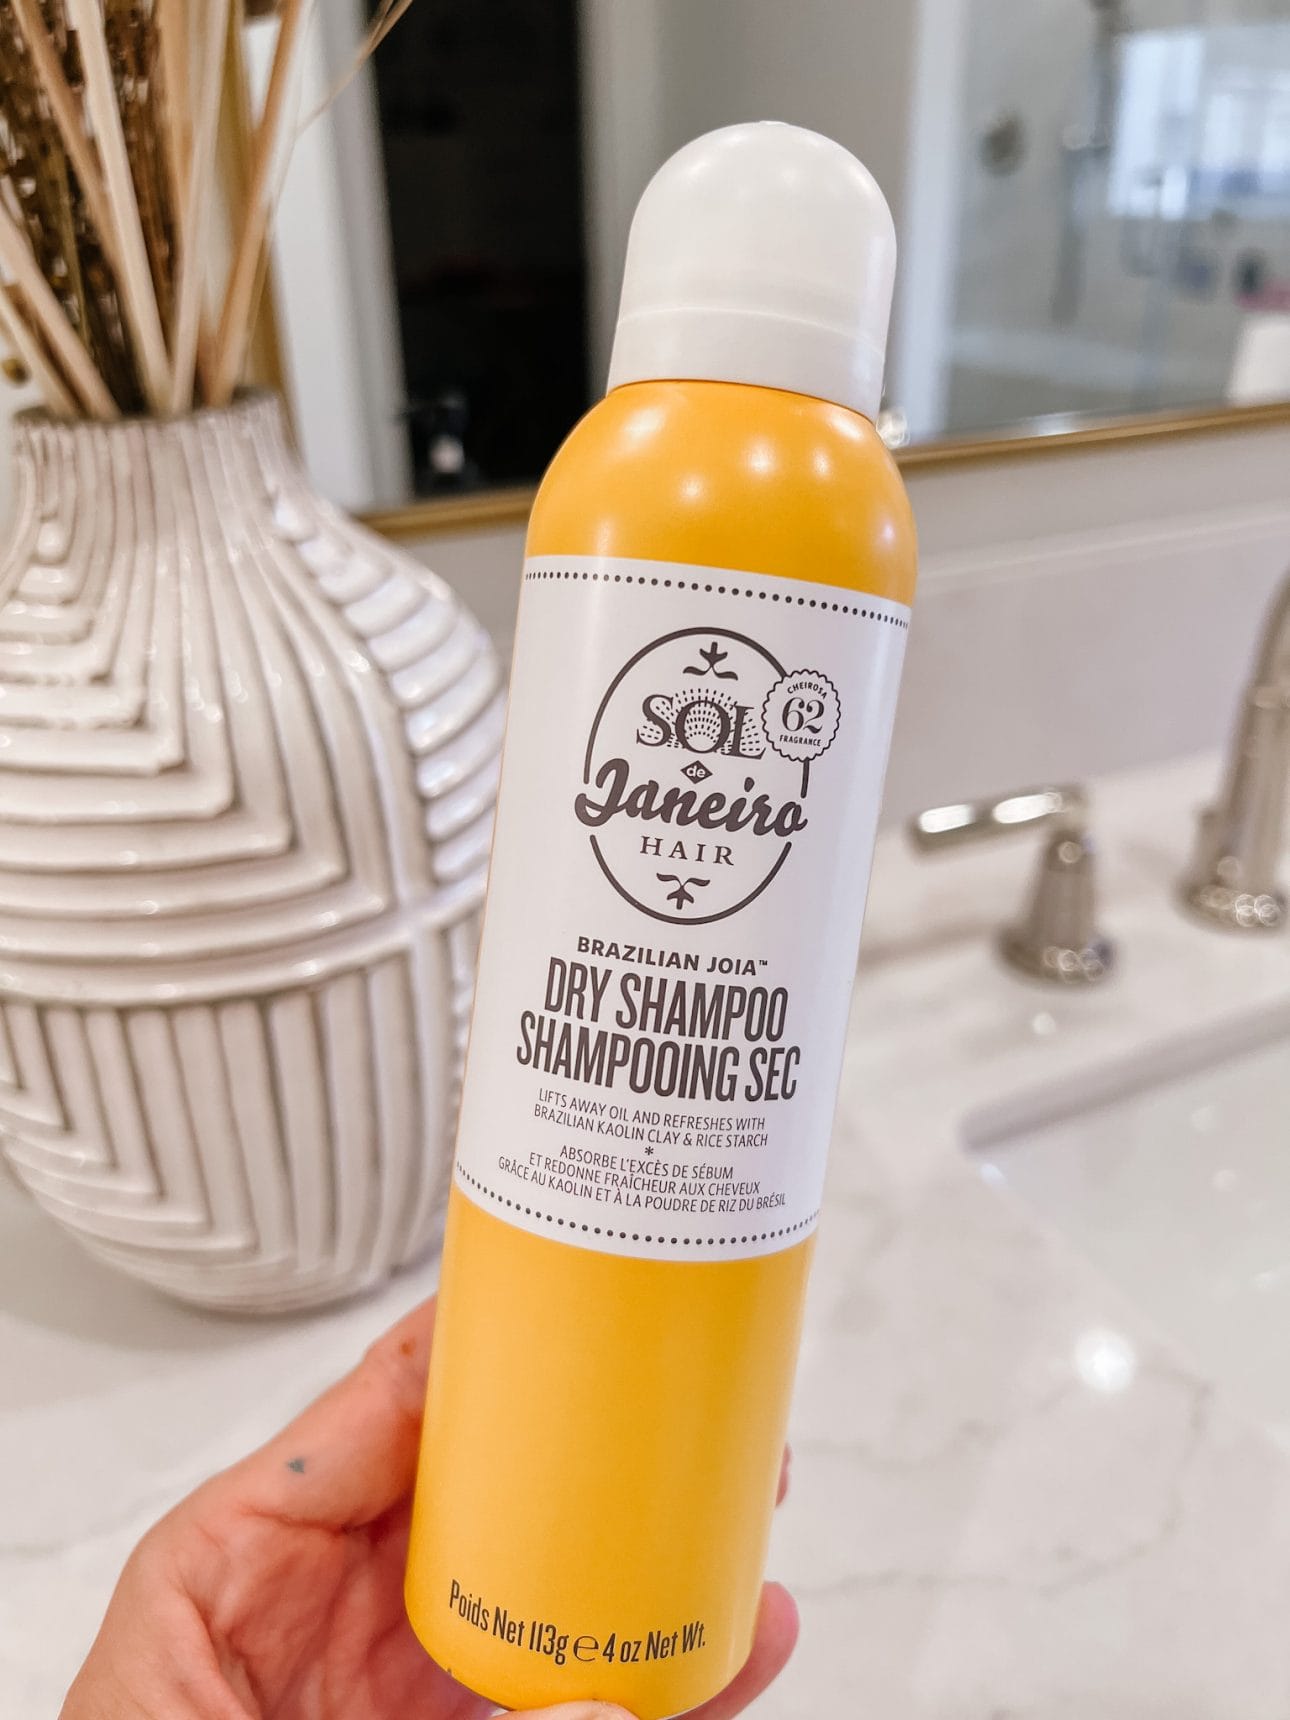 Sol Janiero Dry Shampoo